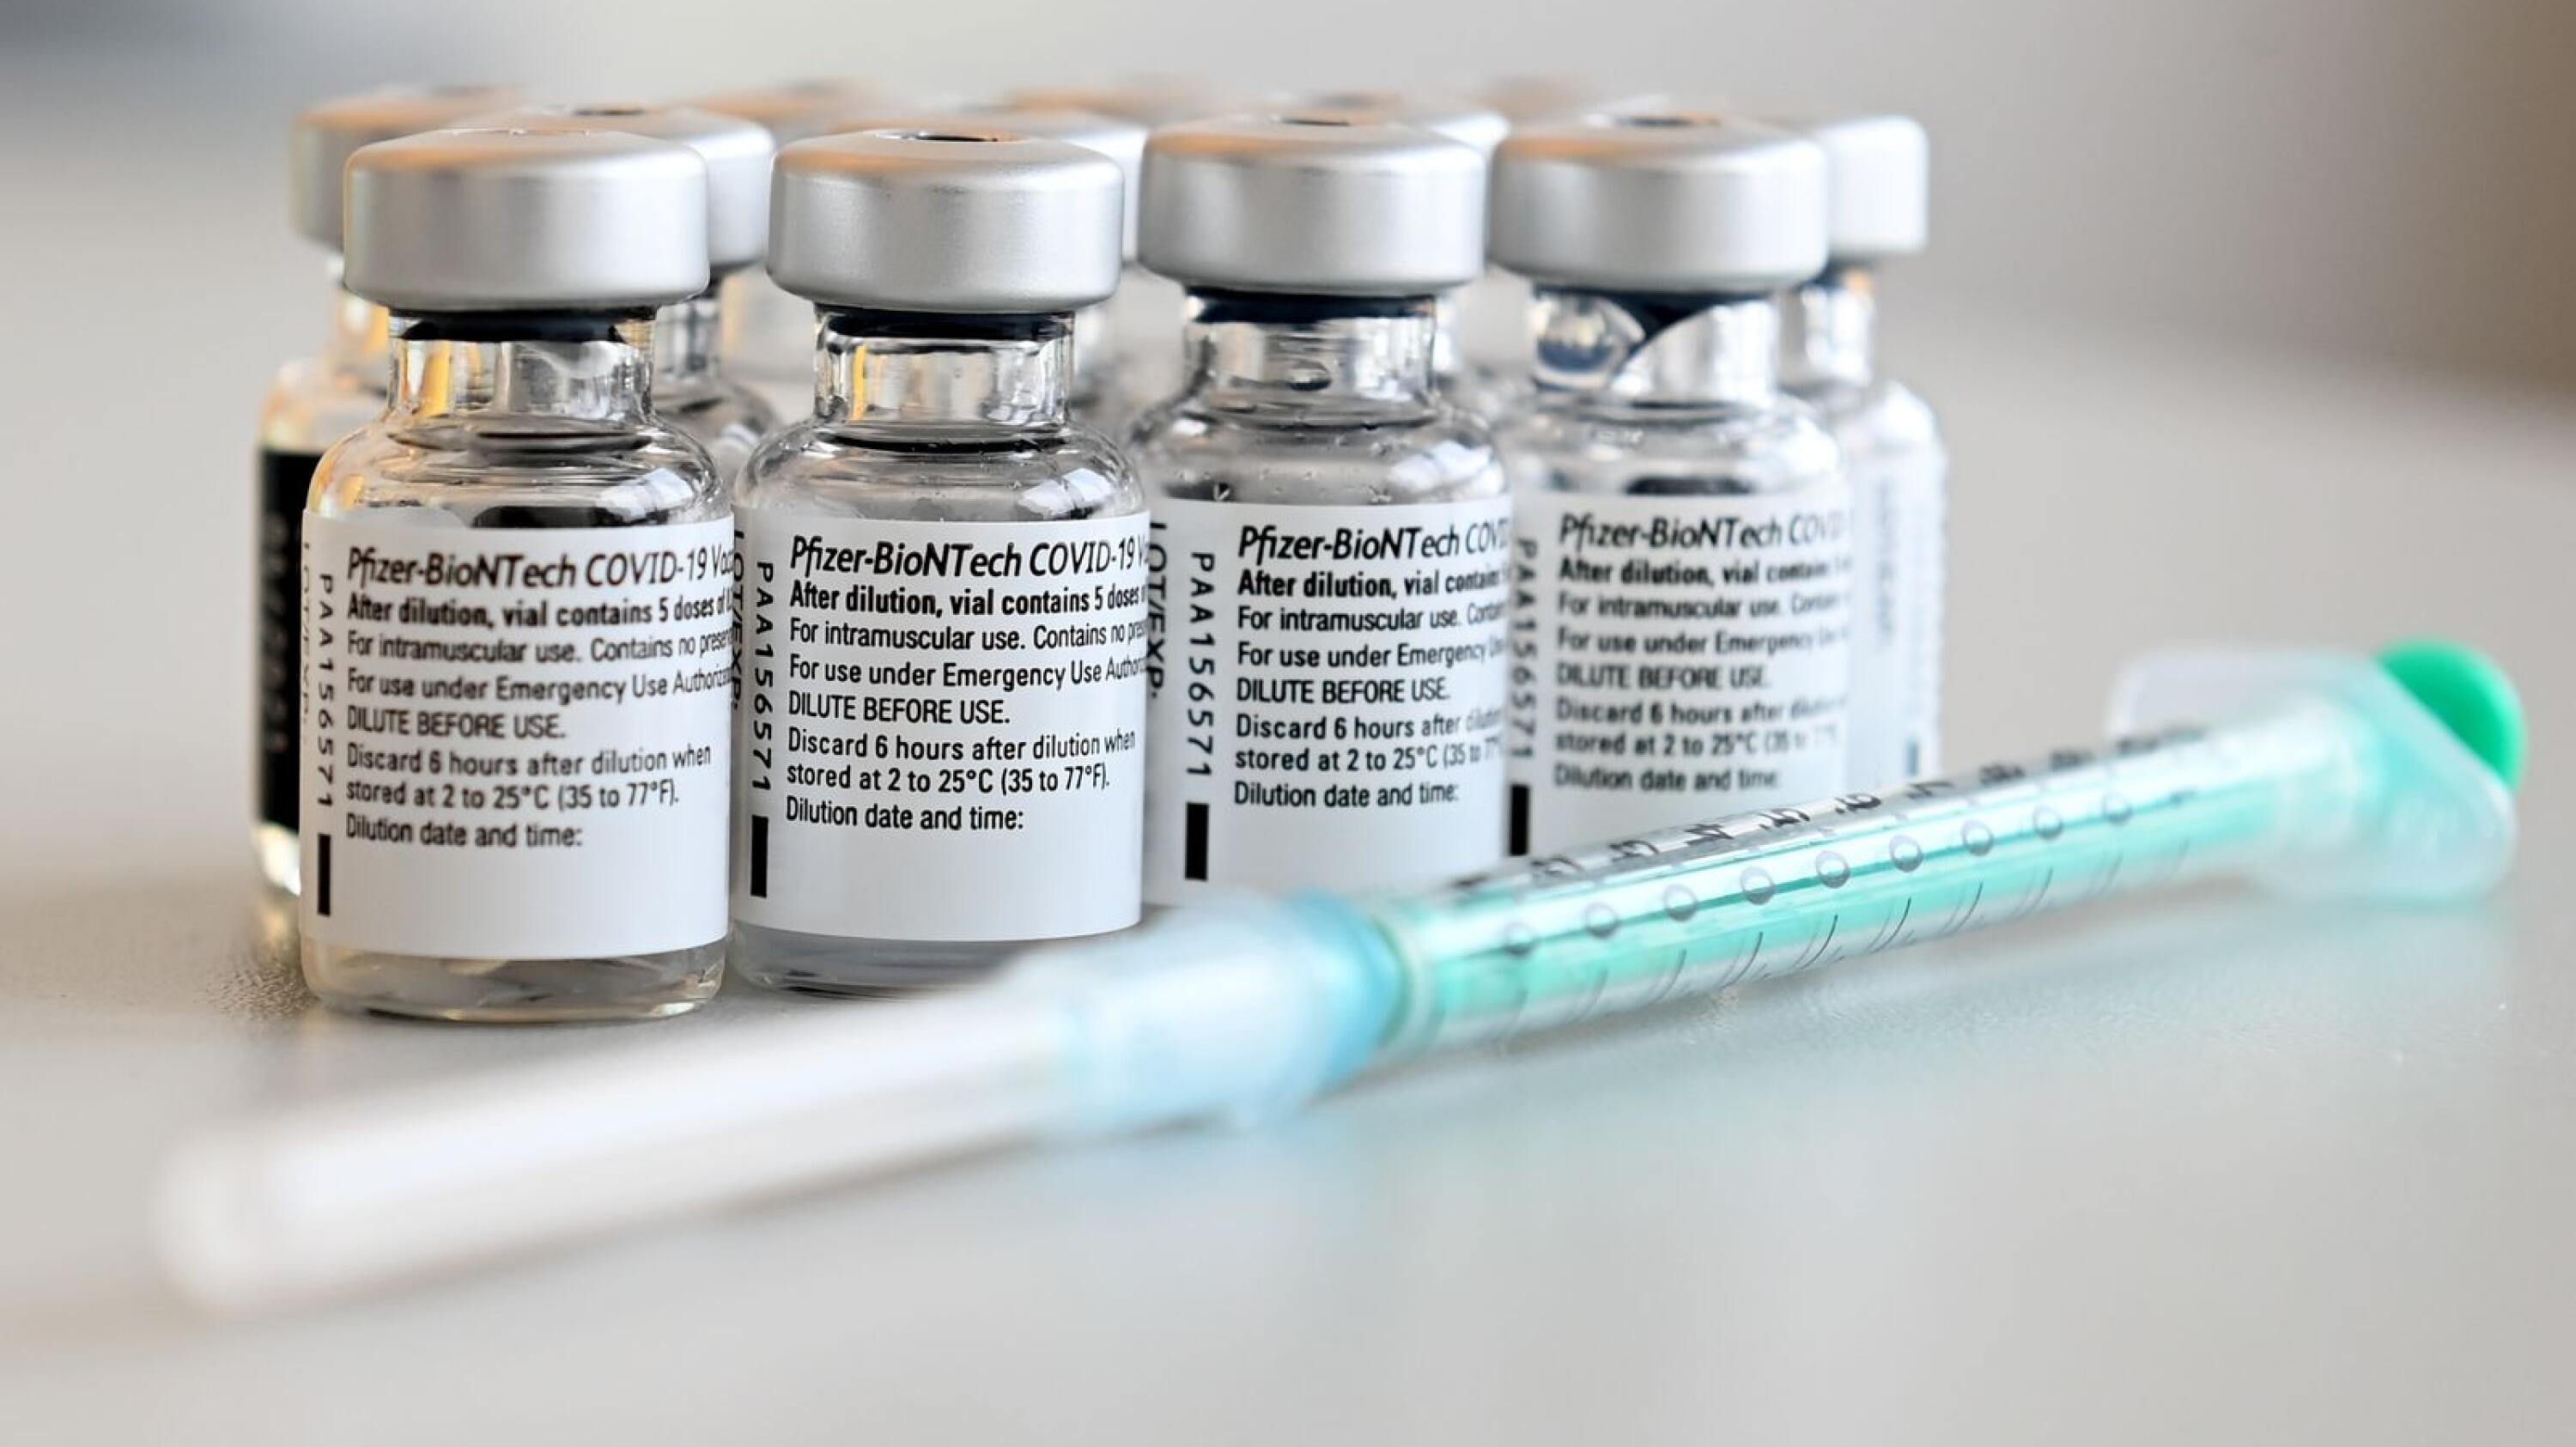 Vials of the Pfizer-BioNTech Covid-19 vaccine